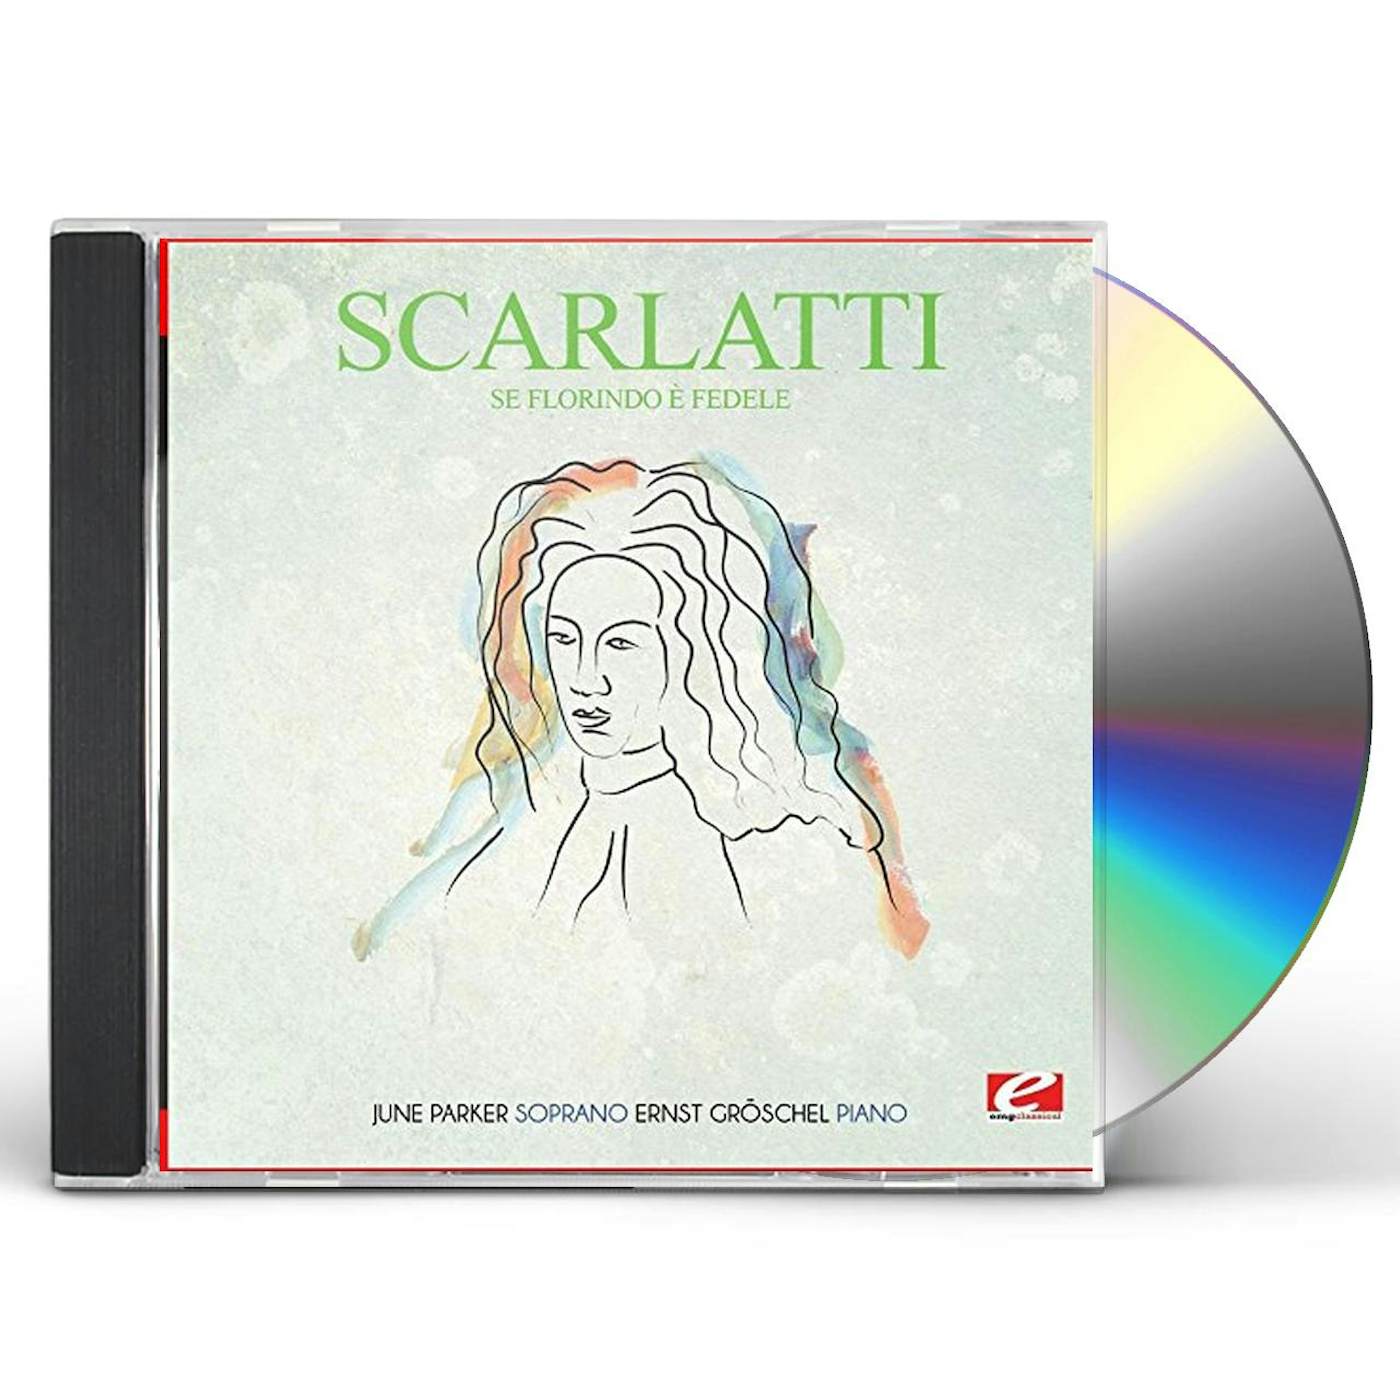 Scarlatti SE FLORINDOE FEDELE CD